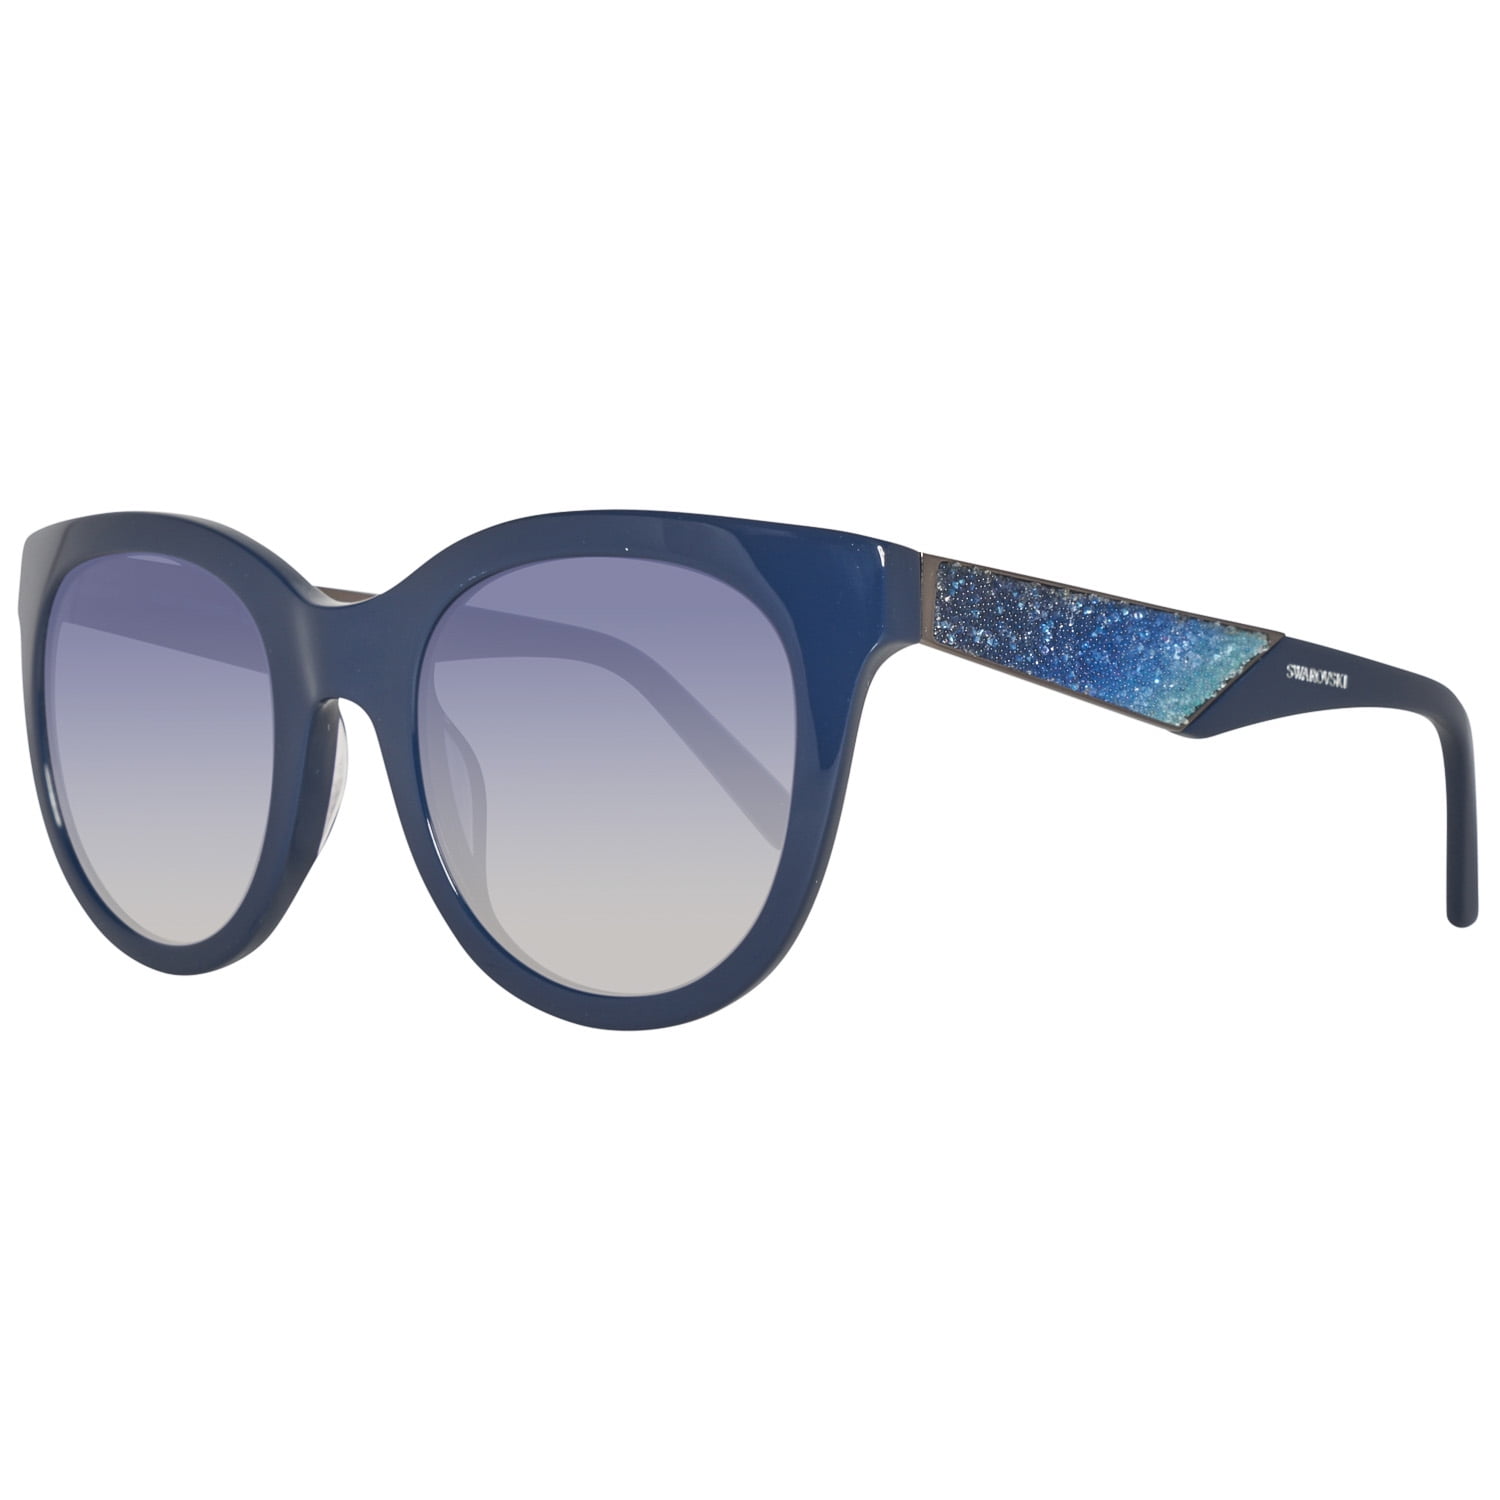 Swarovski Sunglasses Polarized Fashion Sun Glasses Swarovski Shiny Blue Gradient Blue Women